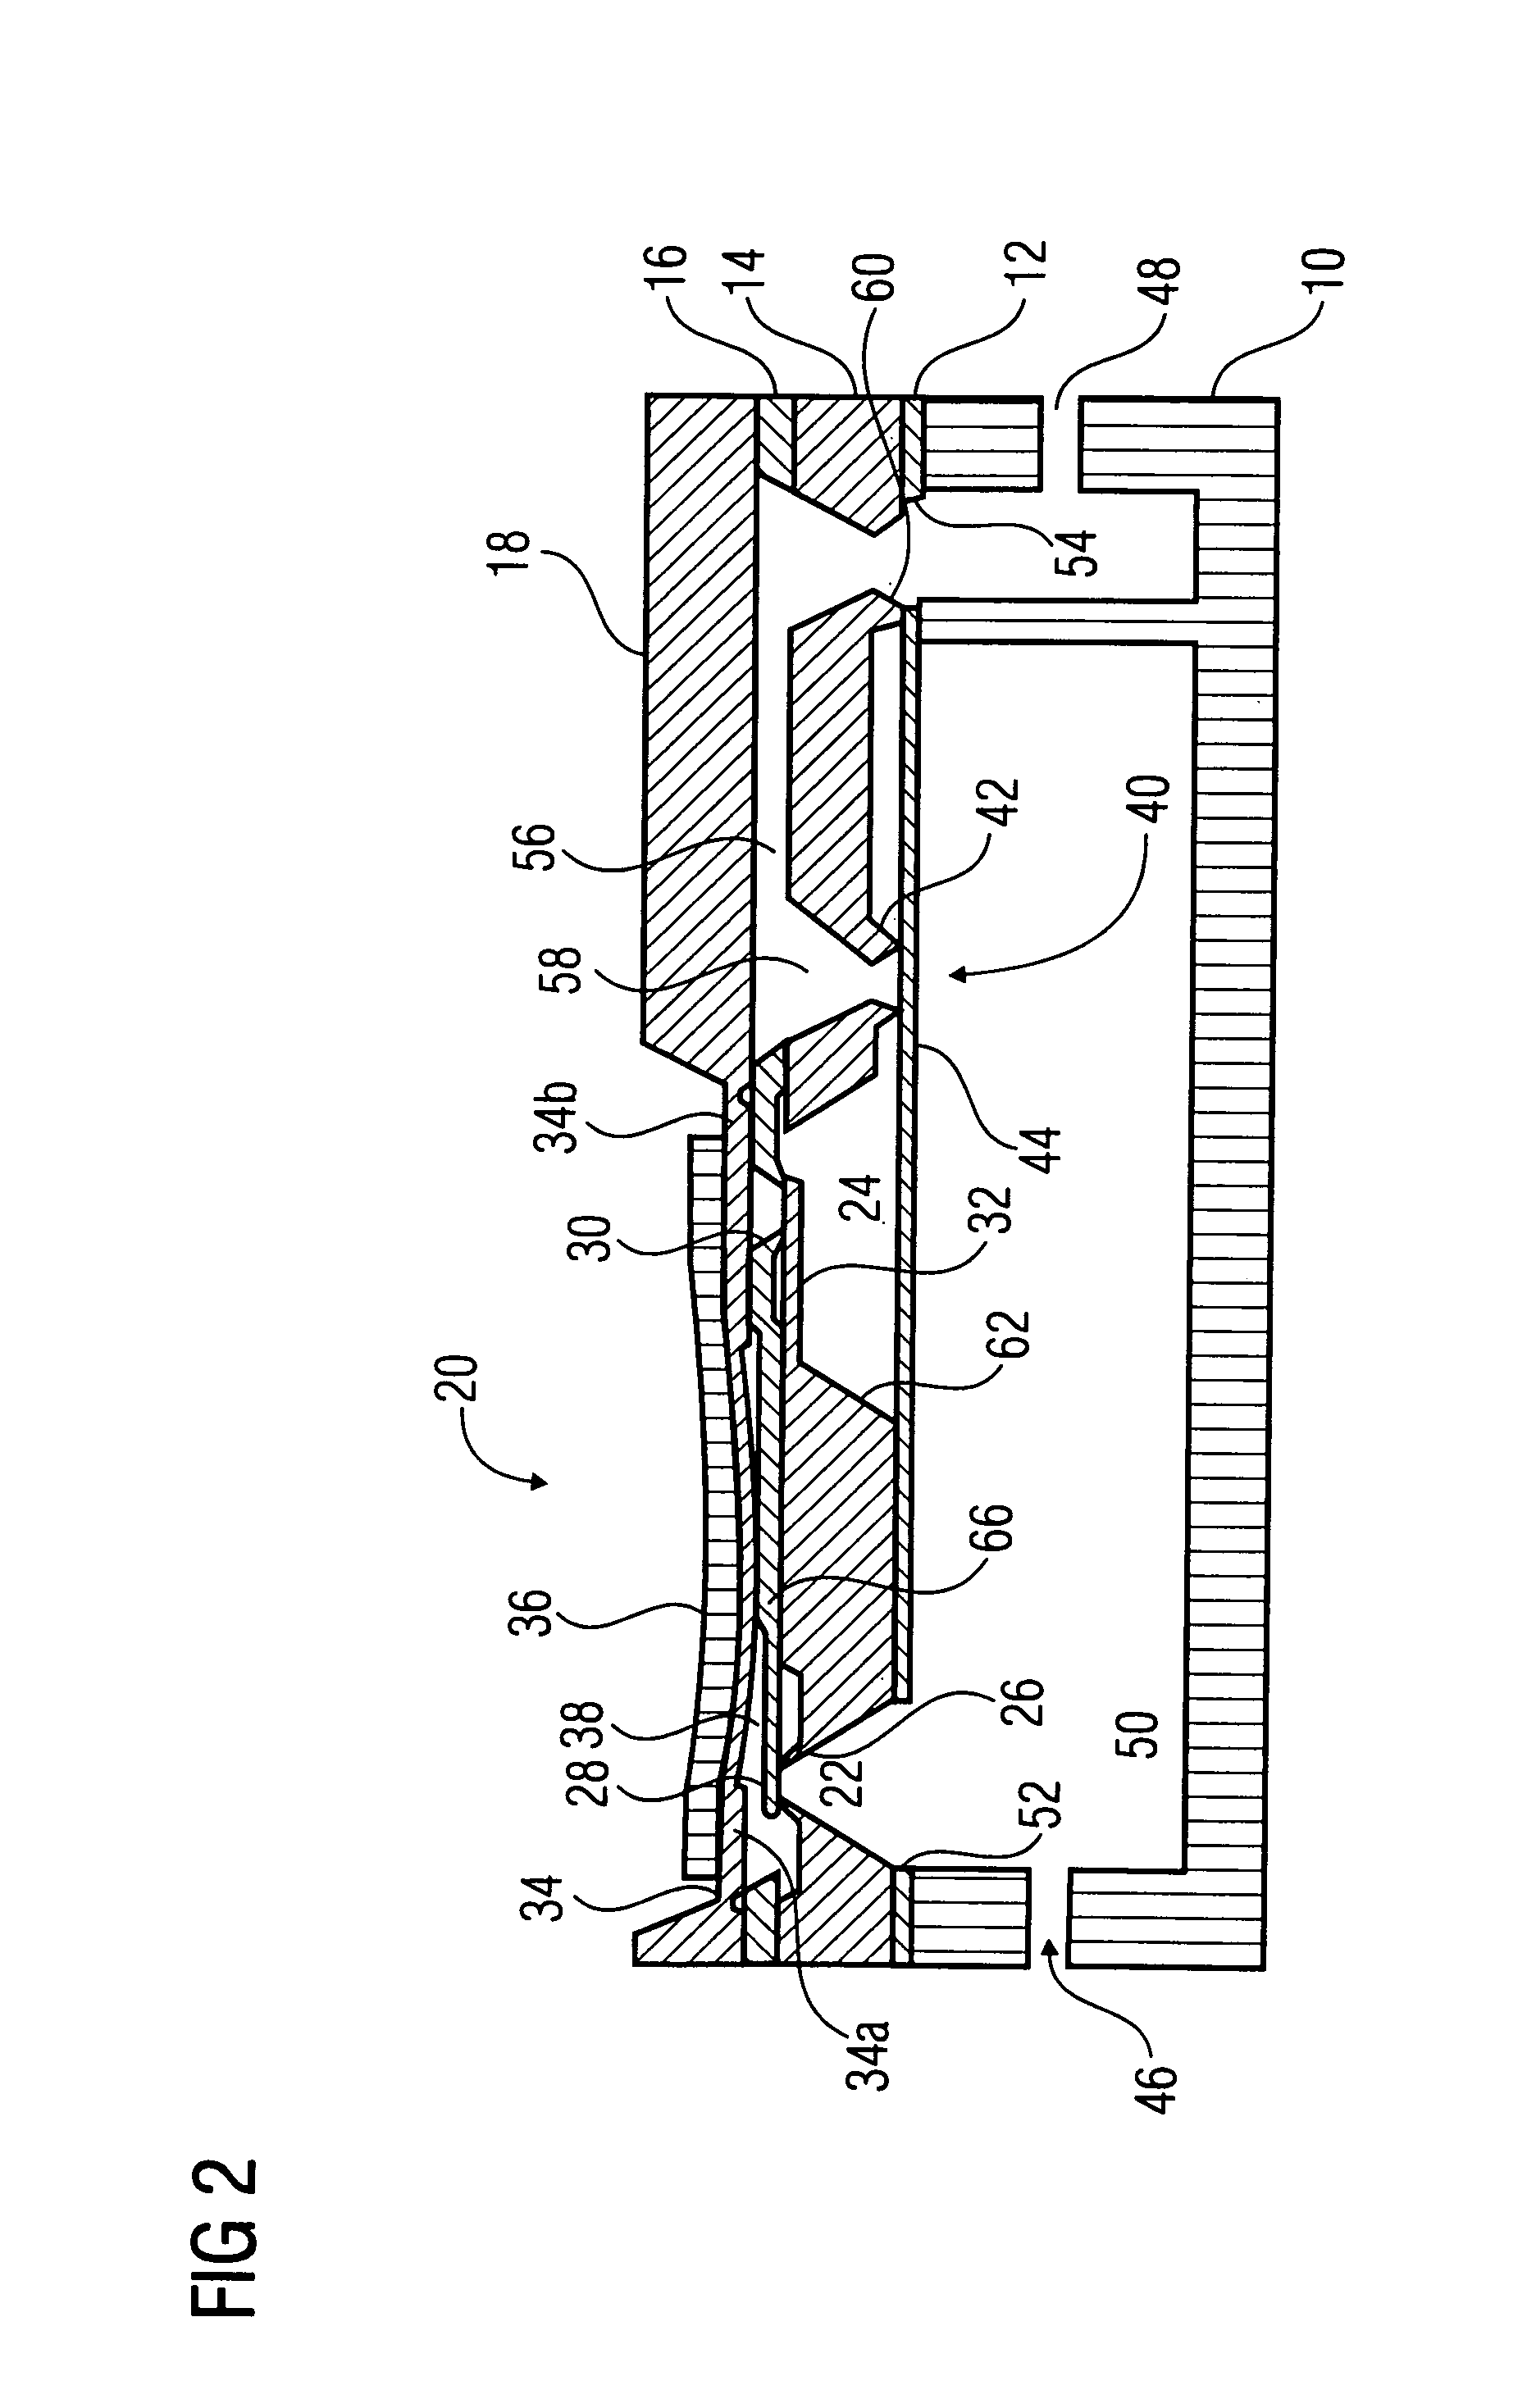 Pump arrangement comprising a safety valve